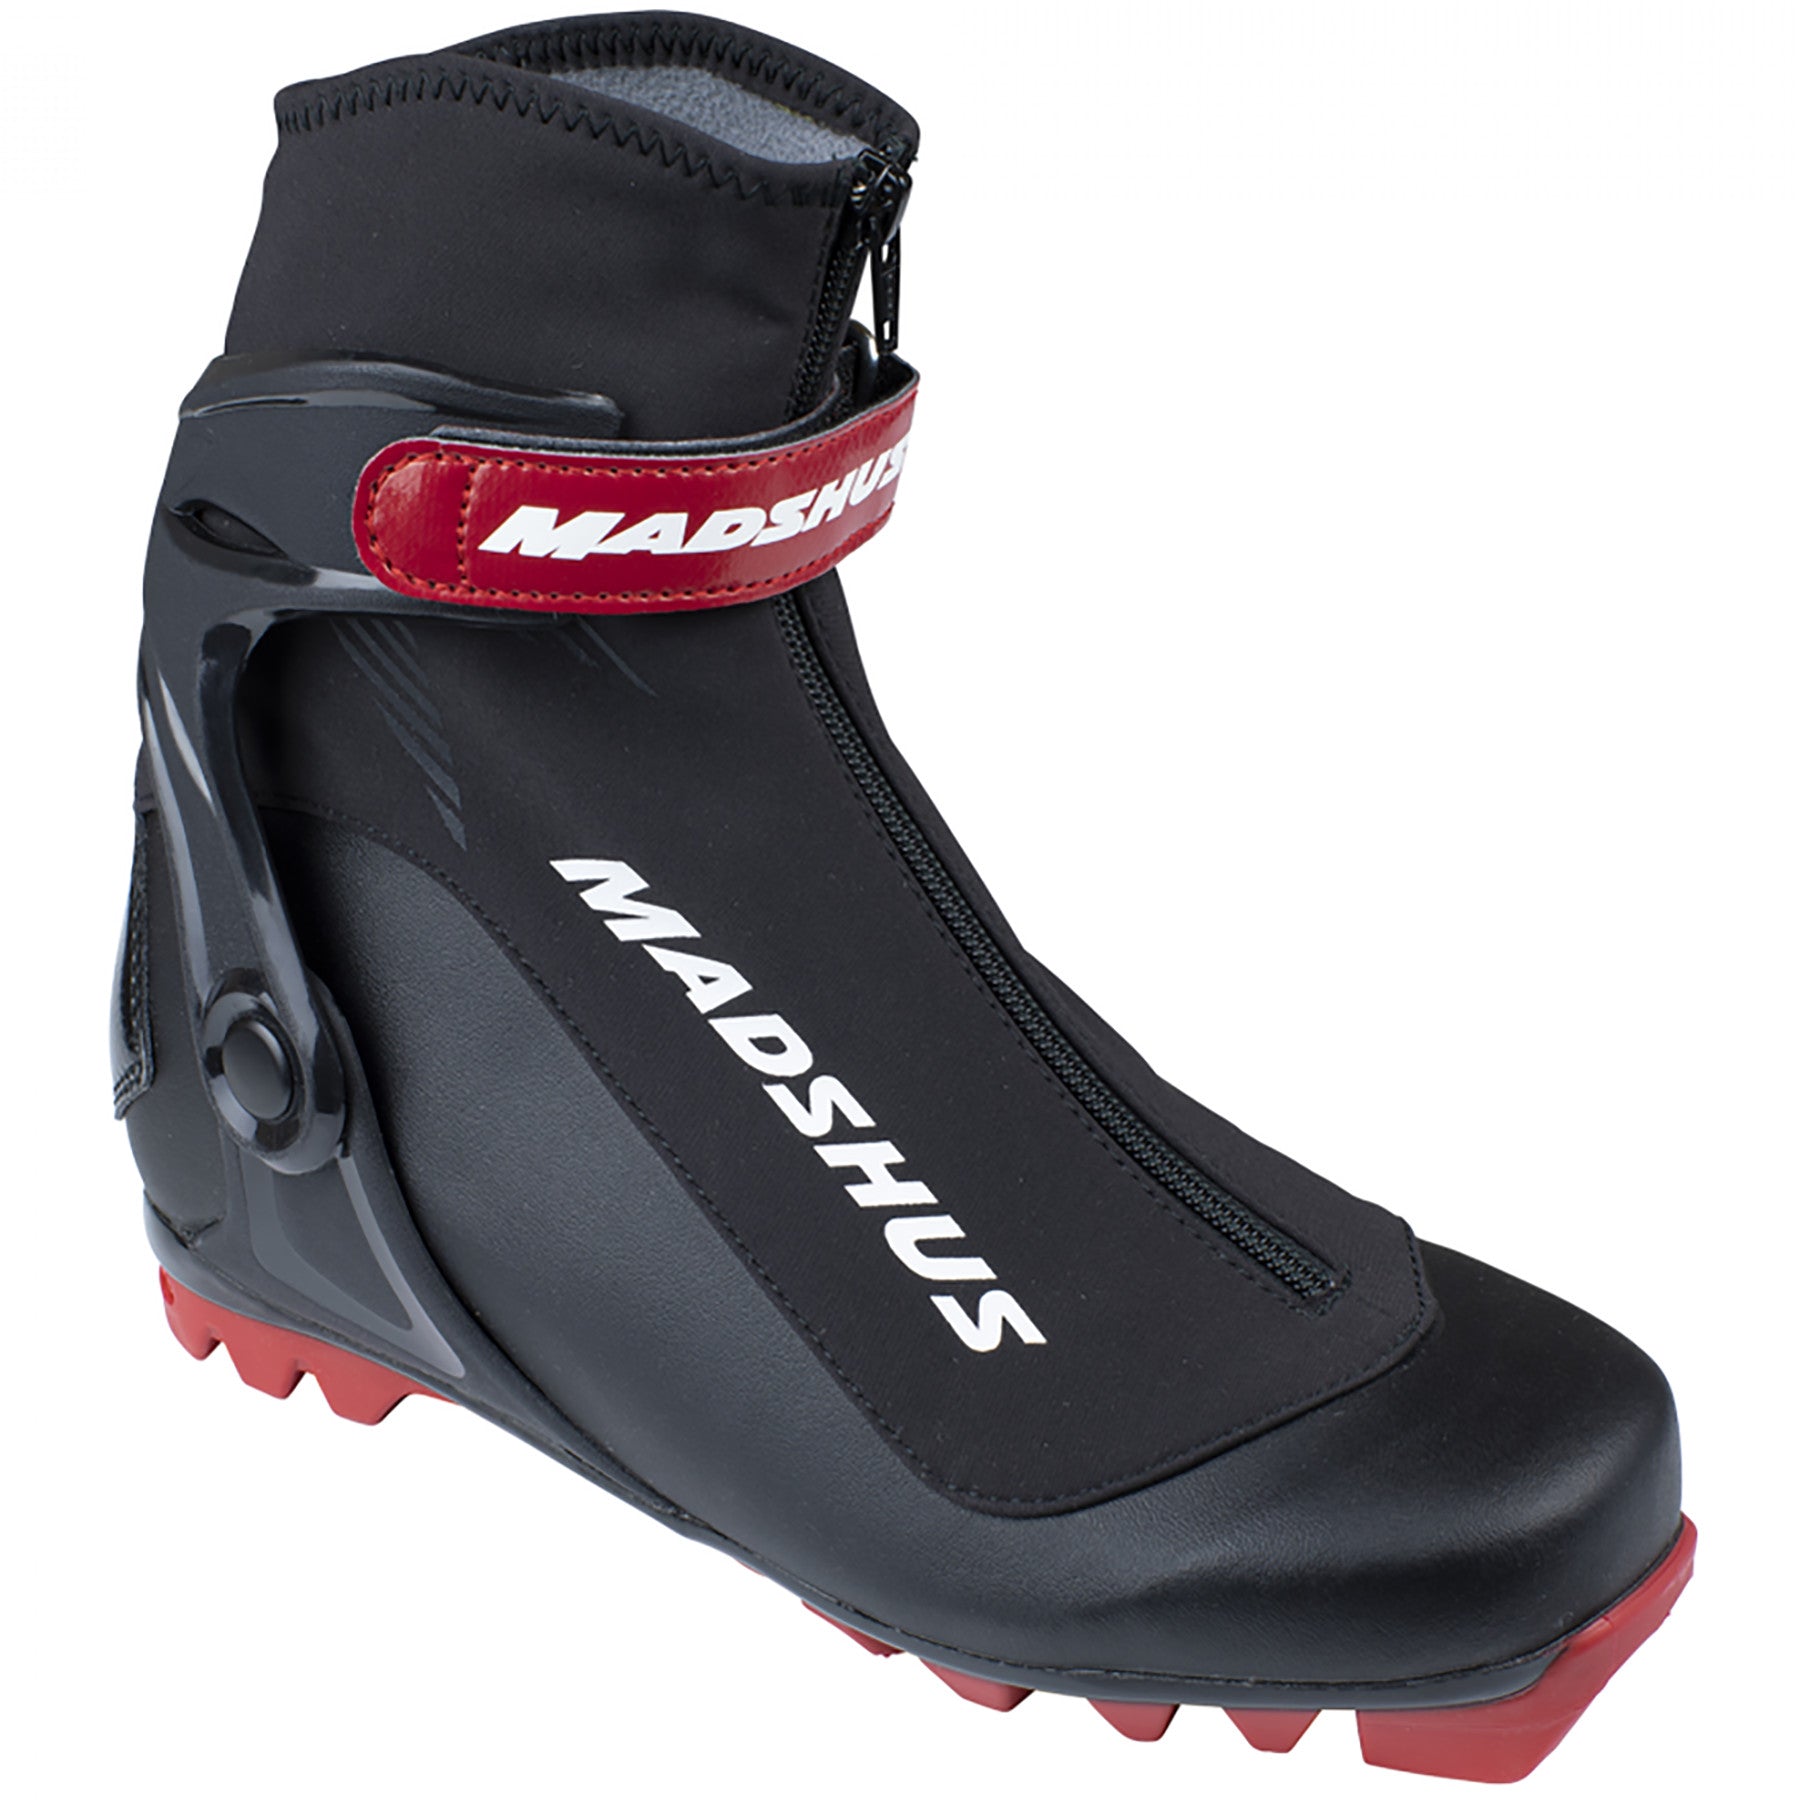 Madshus Endurace S Boot 2021-2022